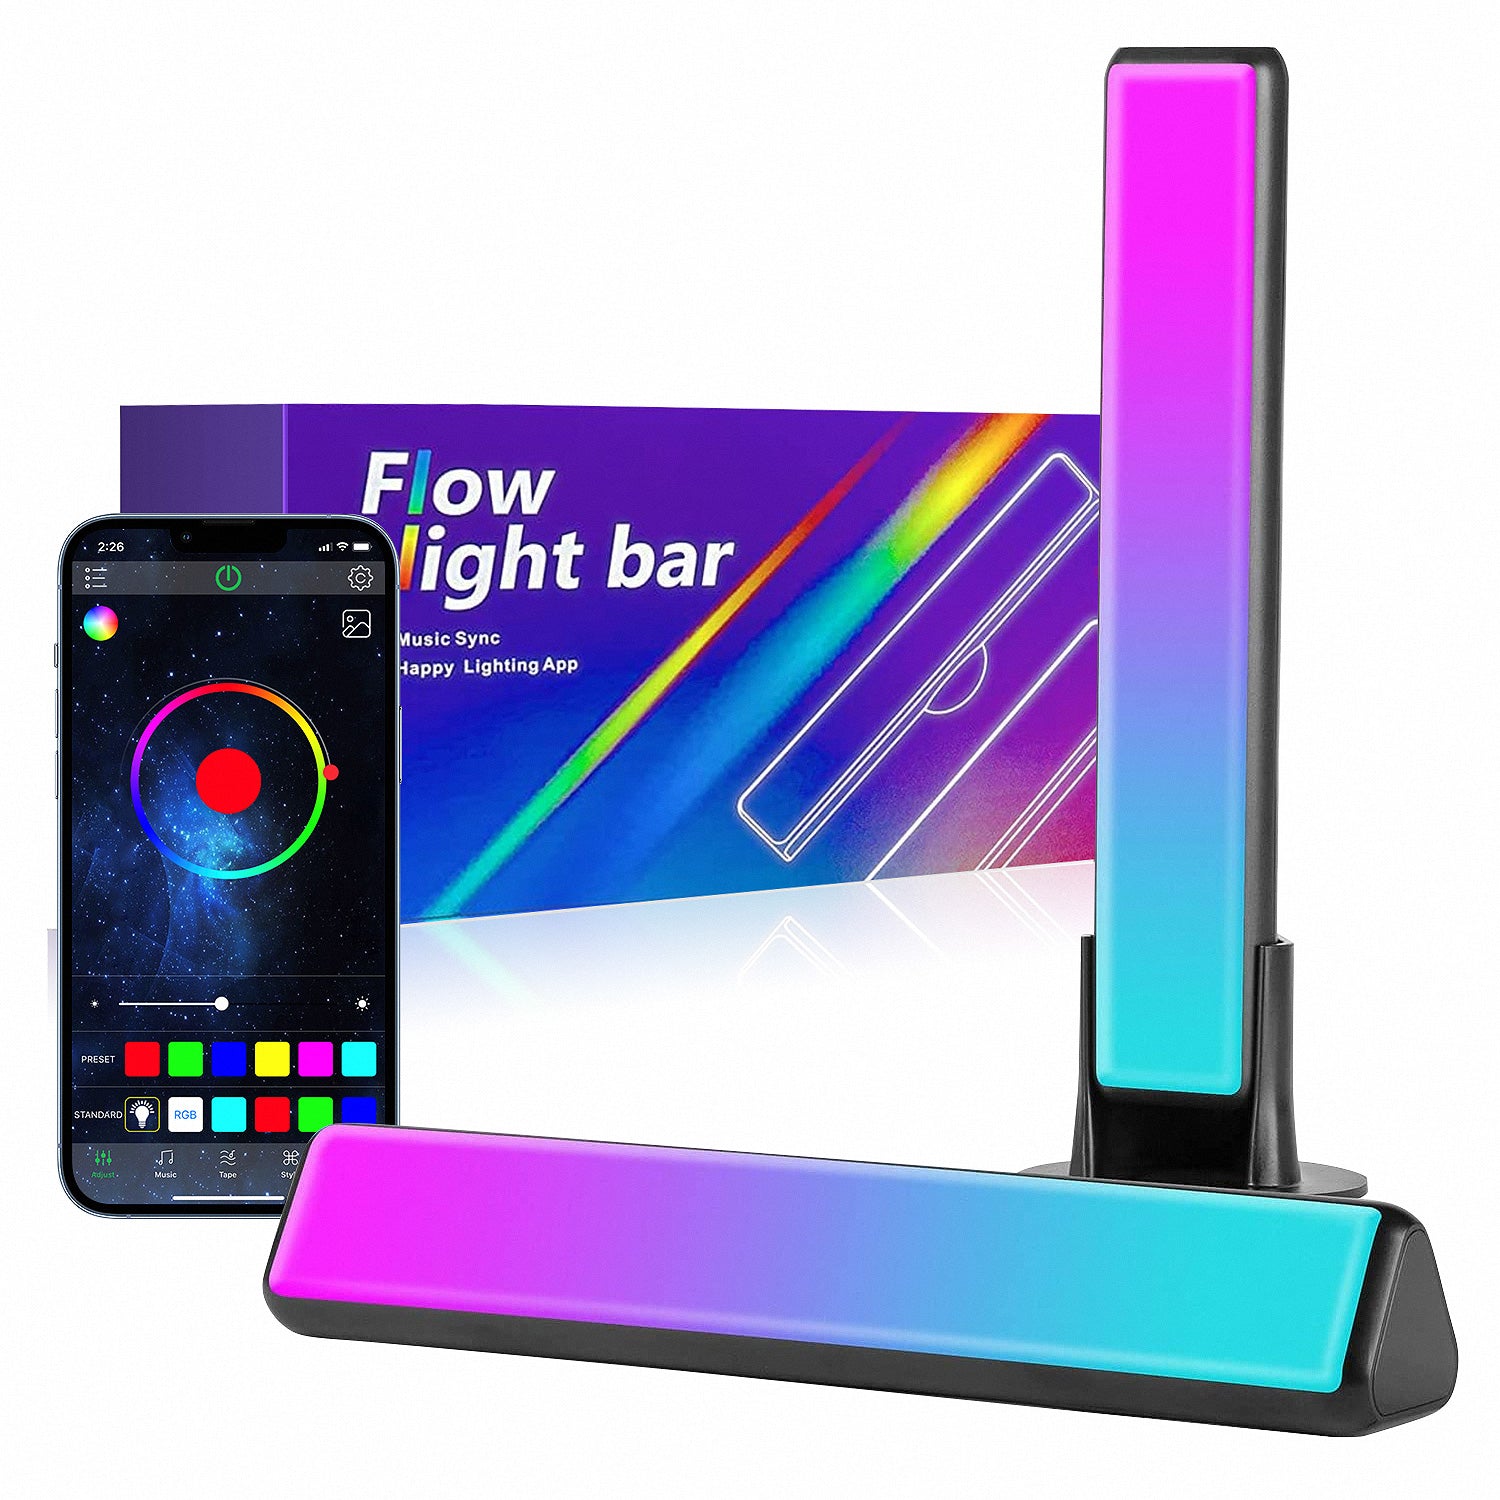 TYPE S Plug & Glow™ App-Controlled 8 Smart Light Bar